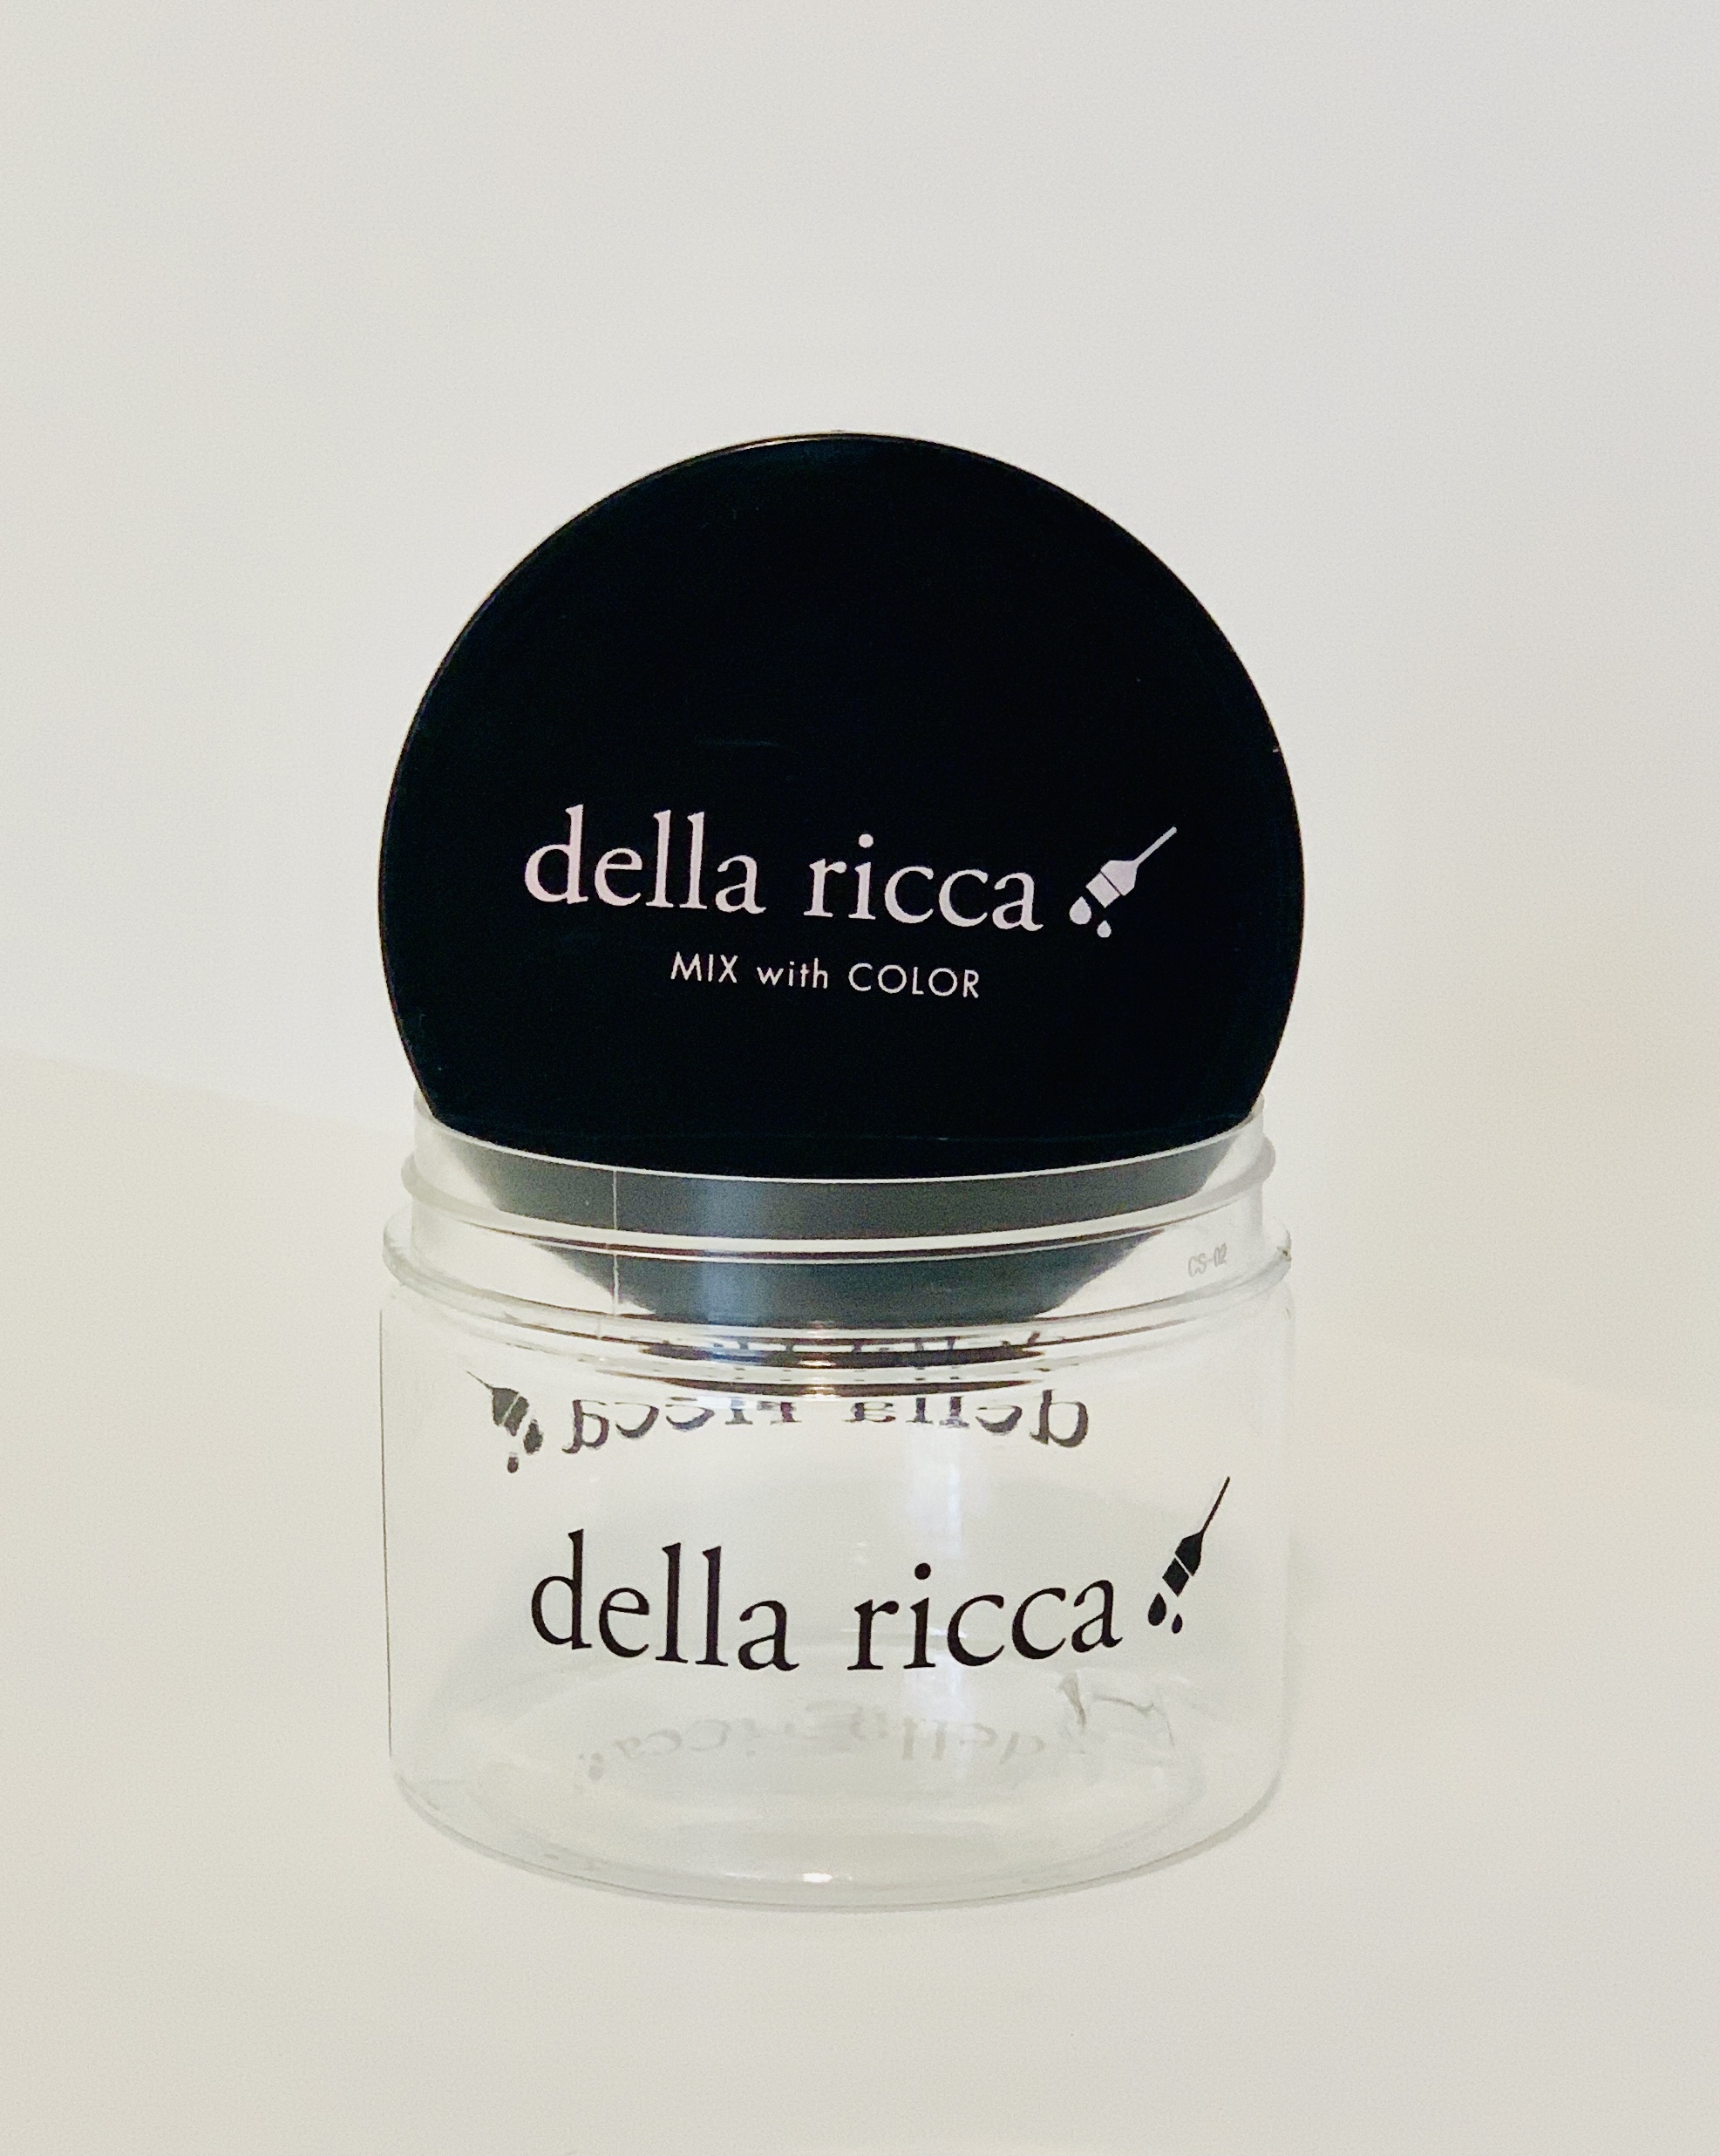 Hairdresser Partner Intro Package - Della Ricca, Premium Italian Hair Color